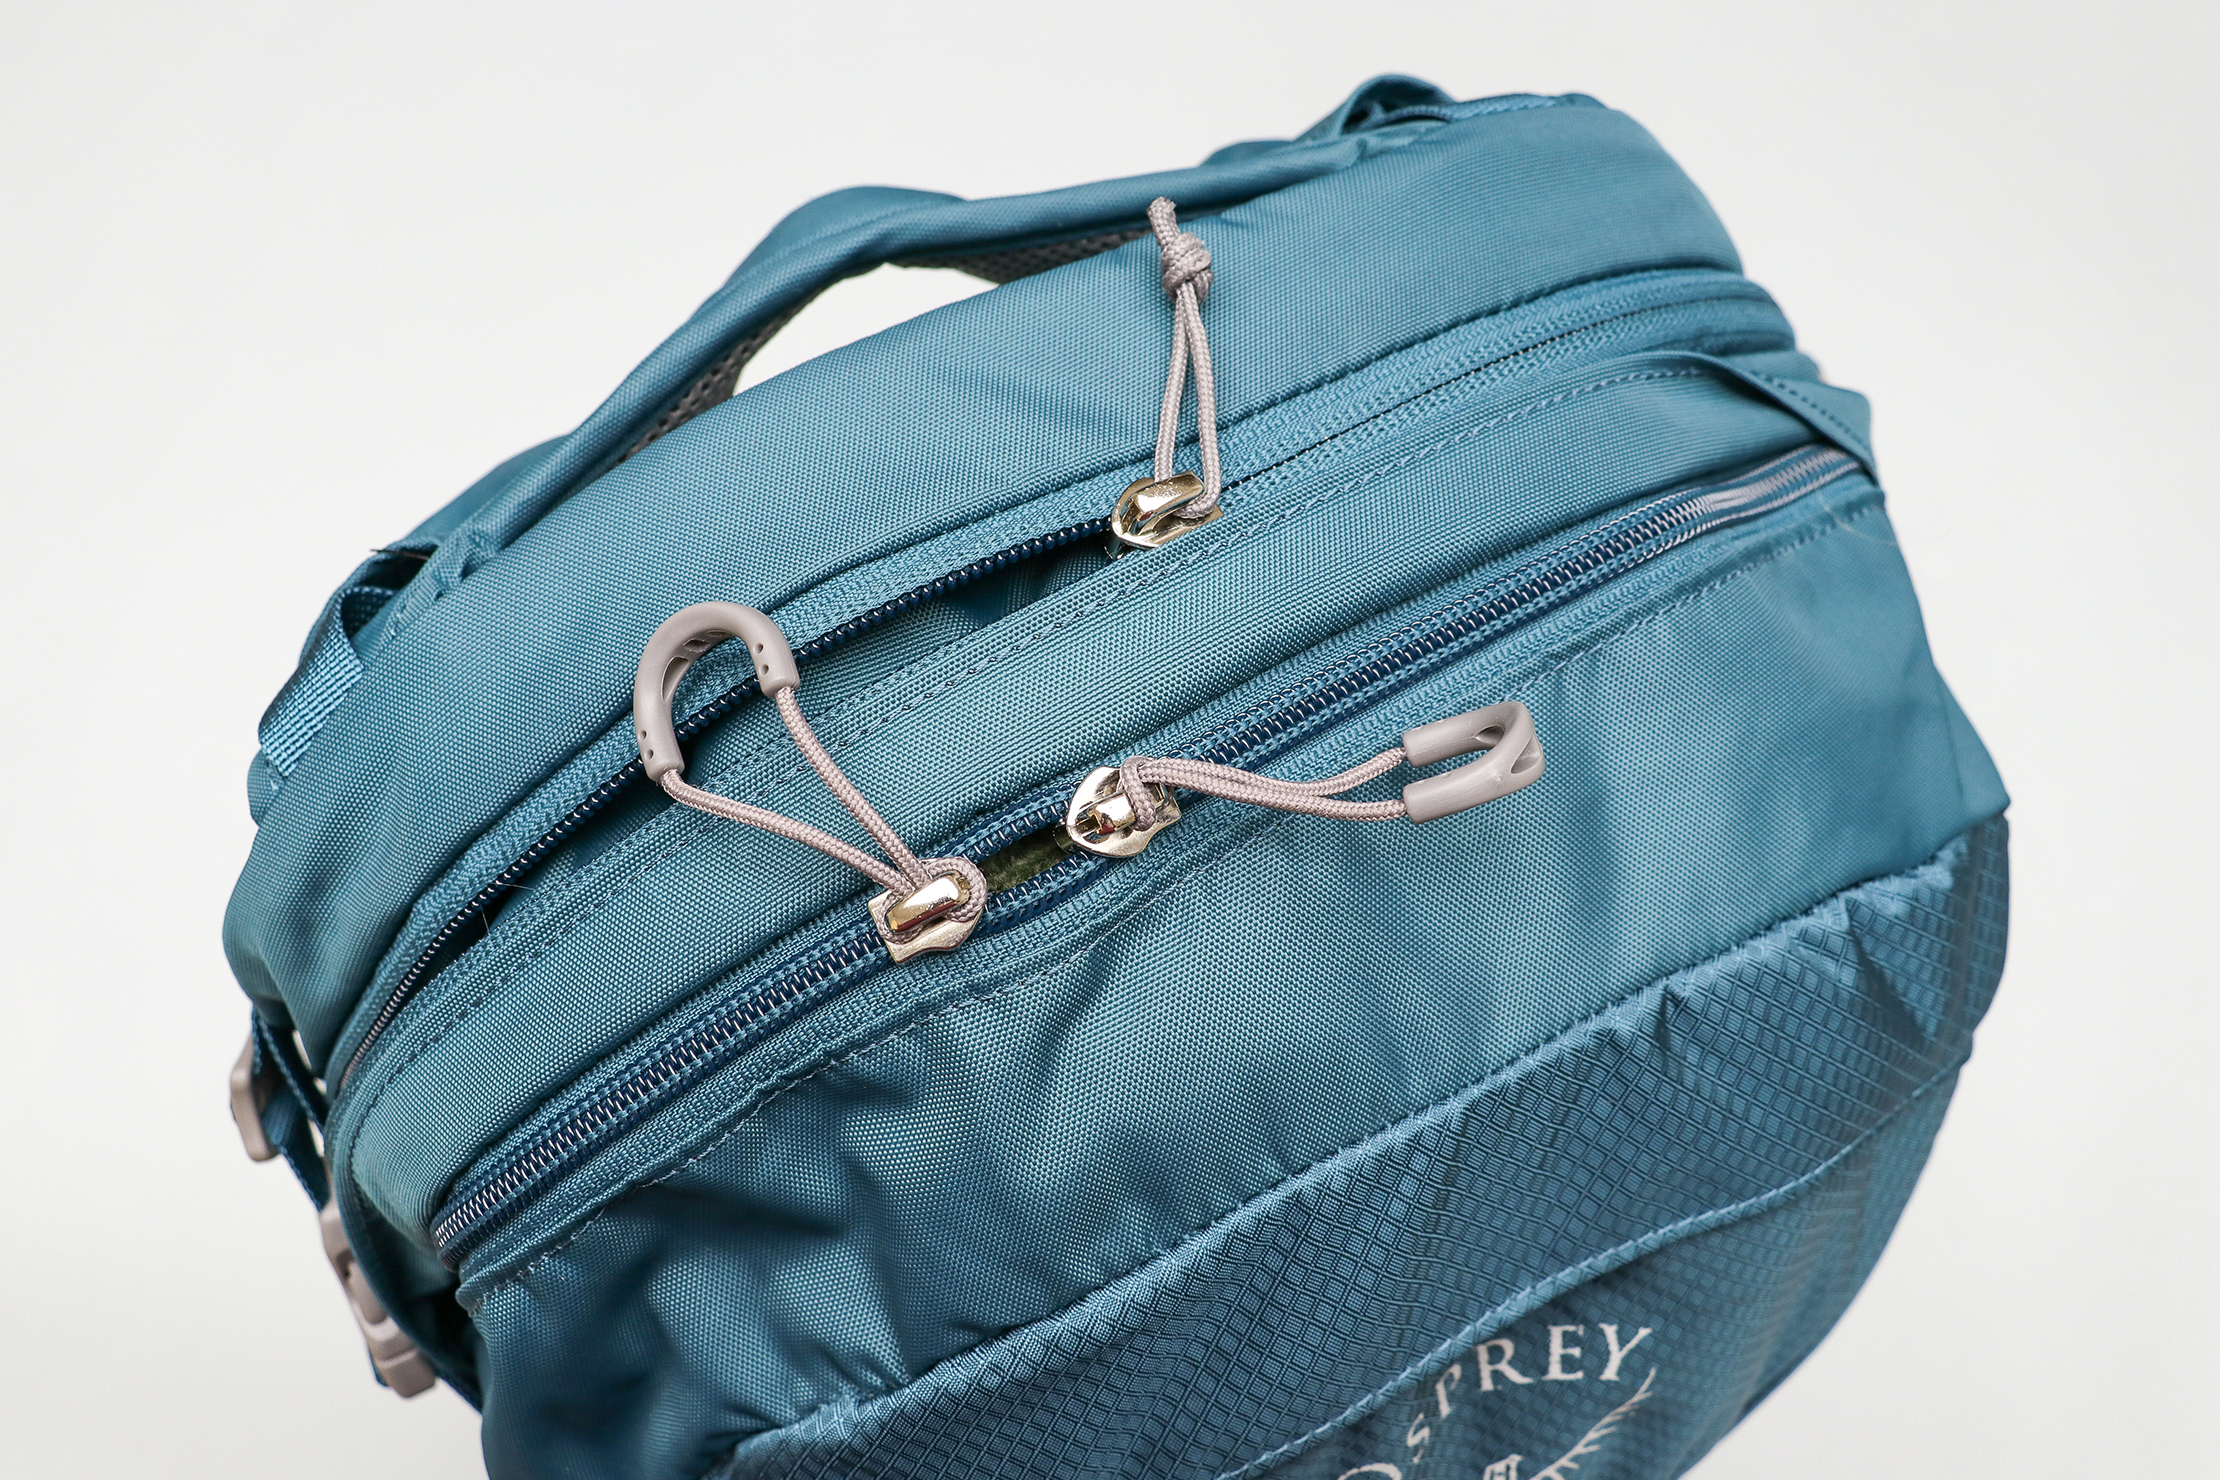 Osprey Daylite Travel Pack Zippers